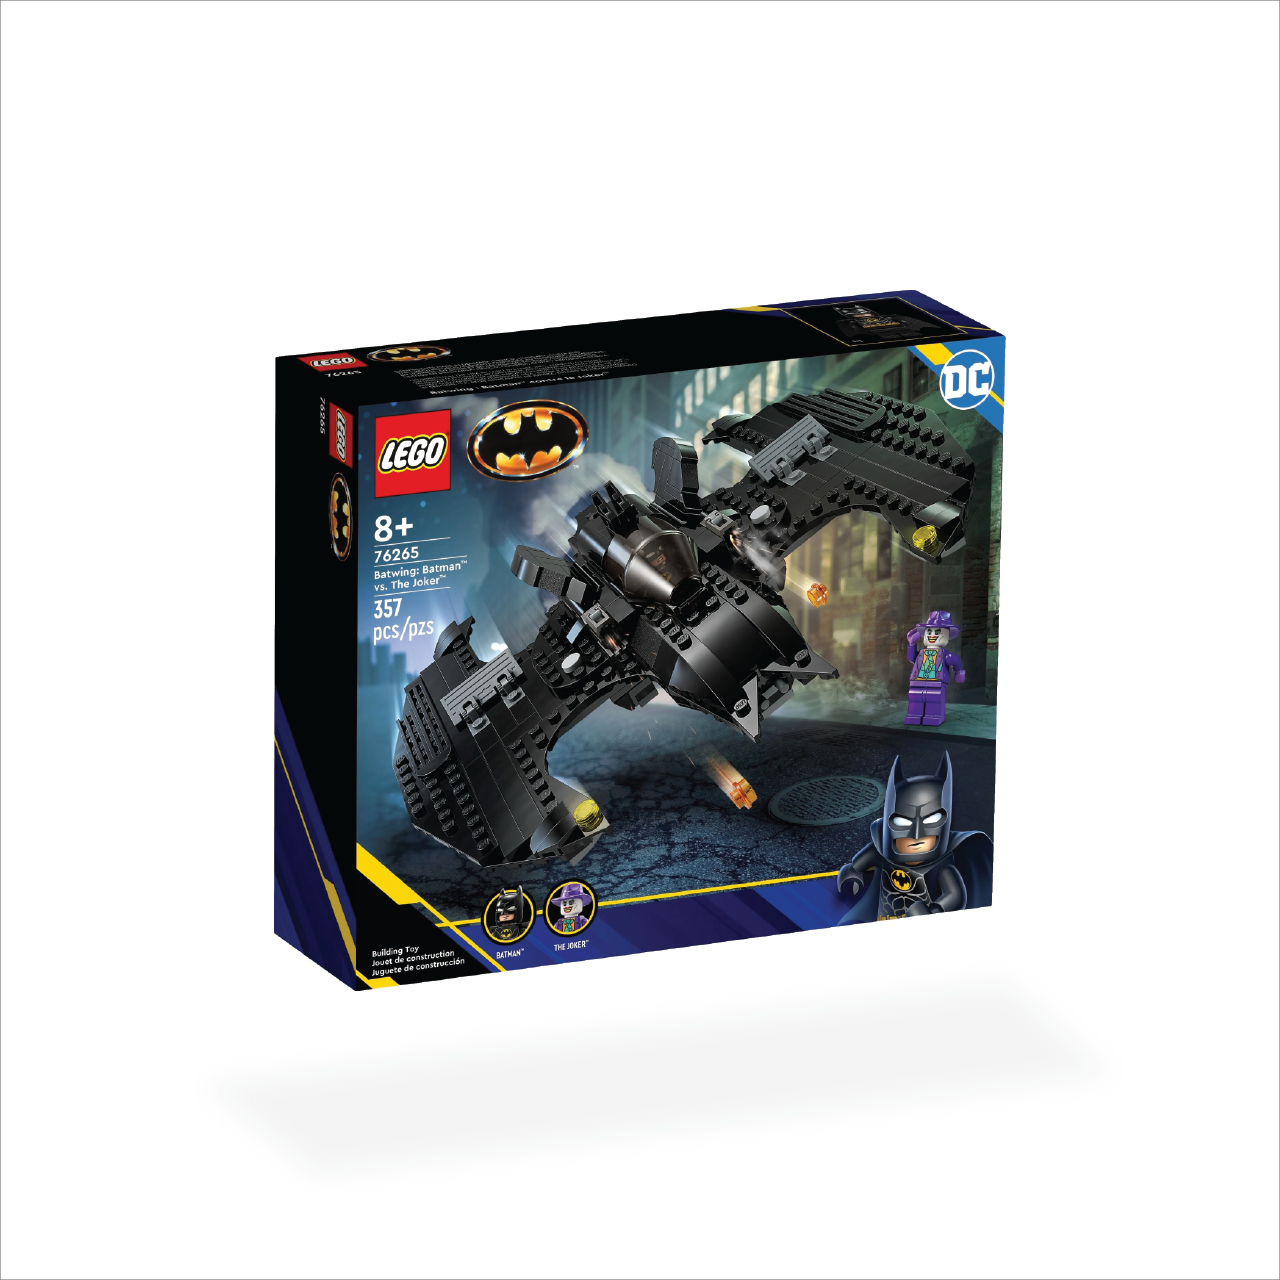 LEGO 76265 Batwing: Batman vs. The Joker